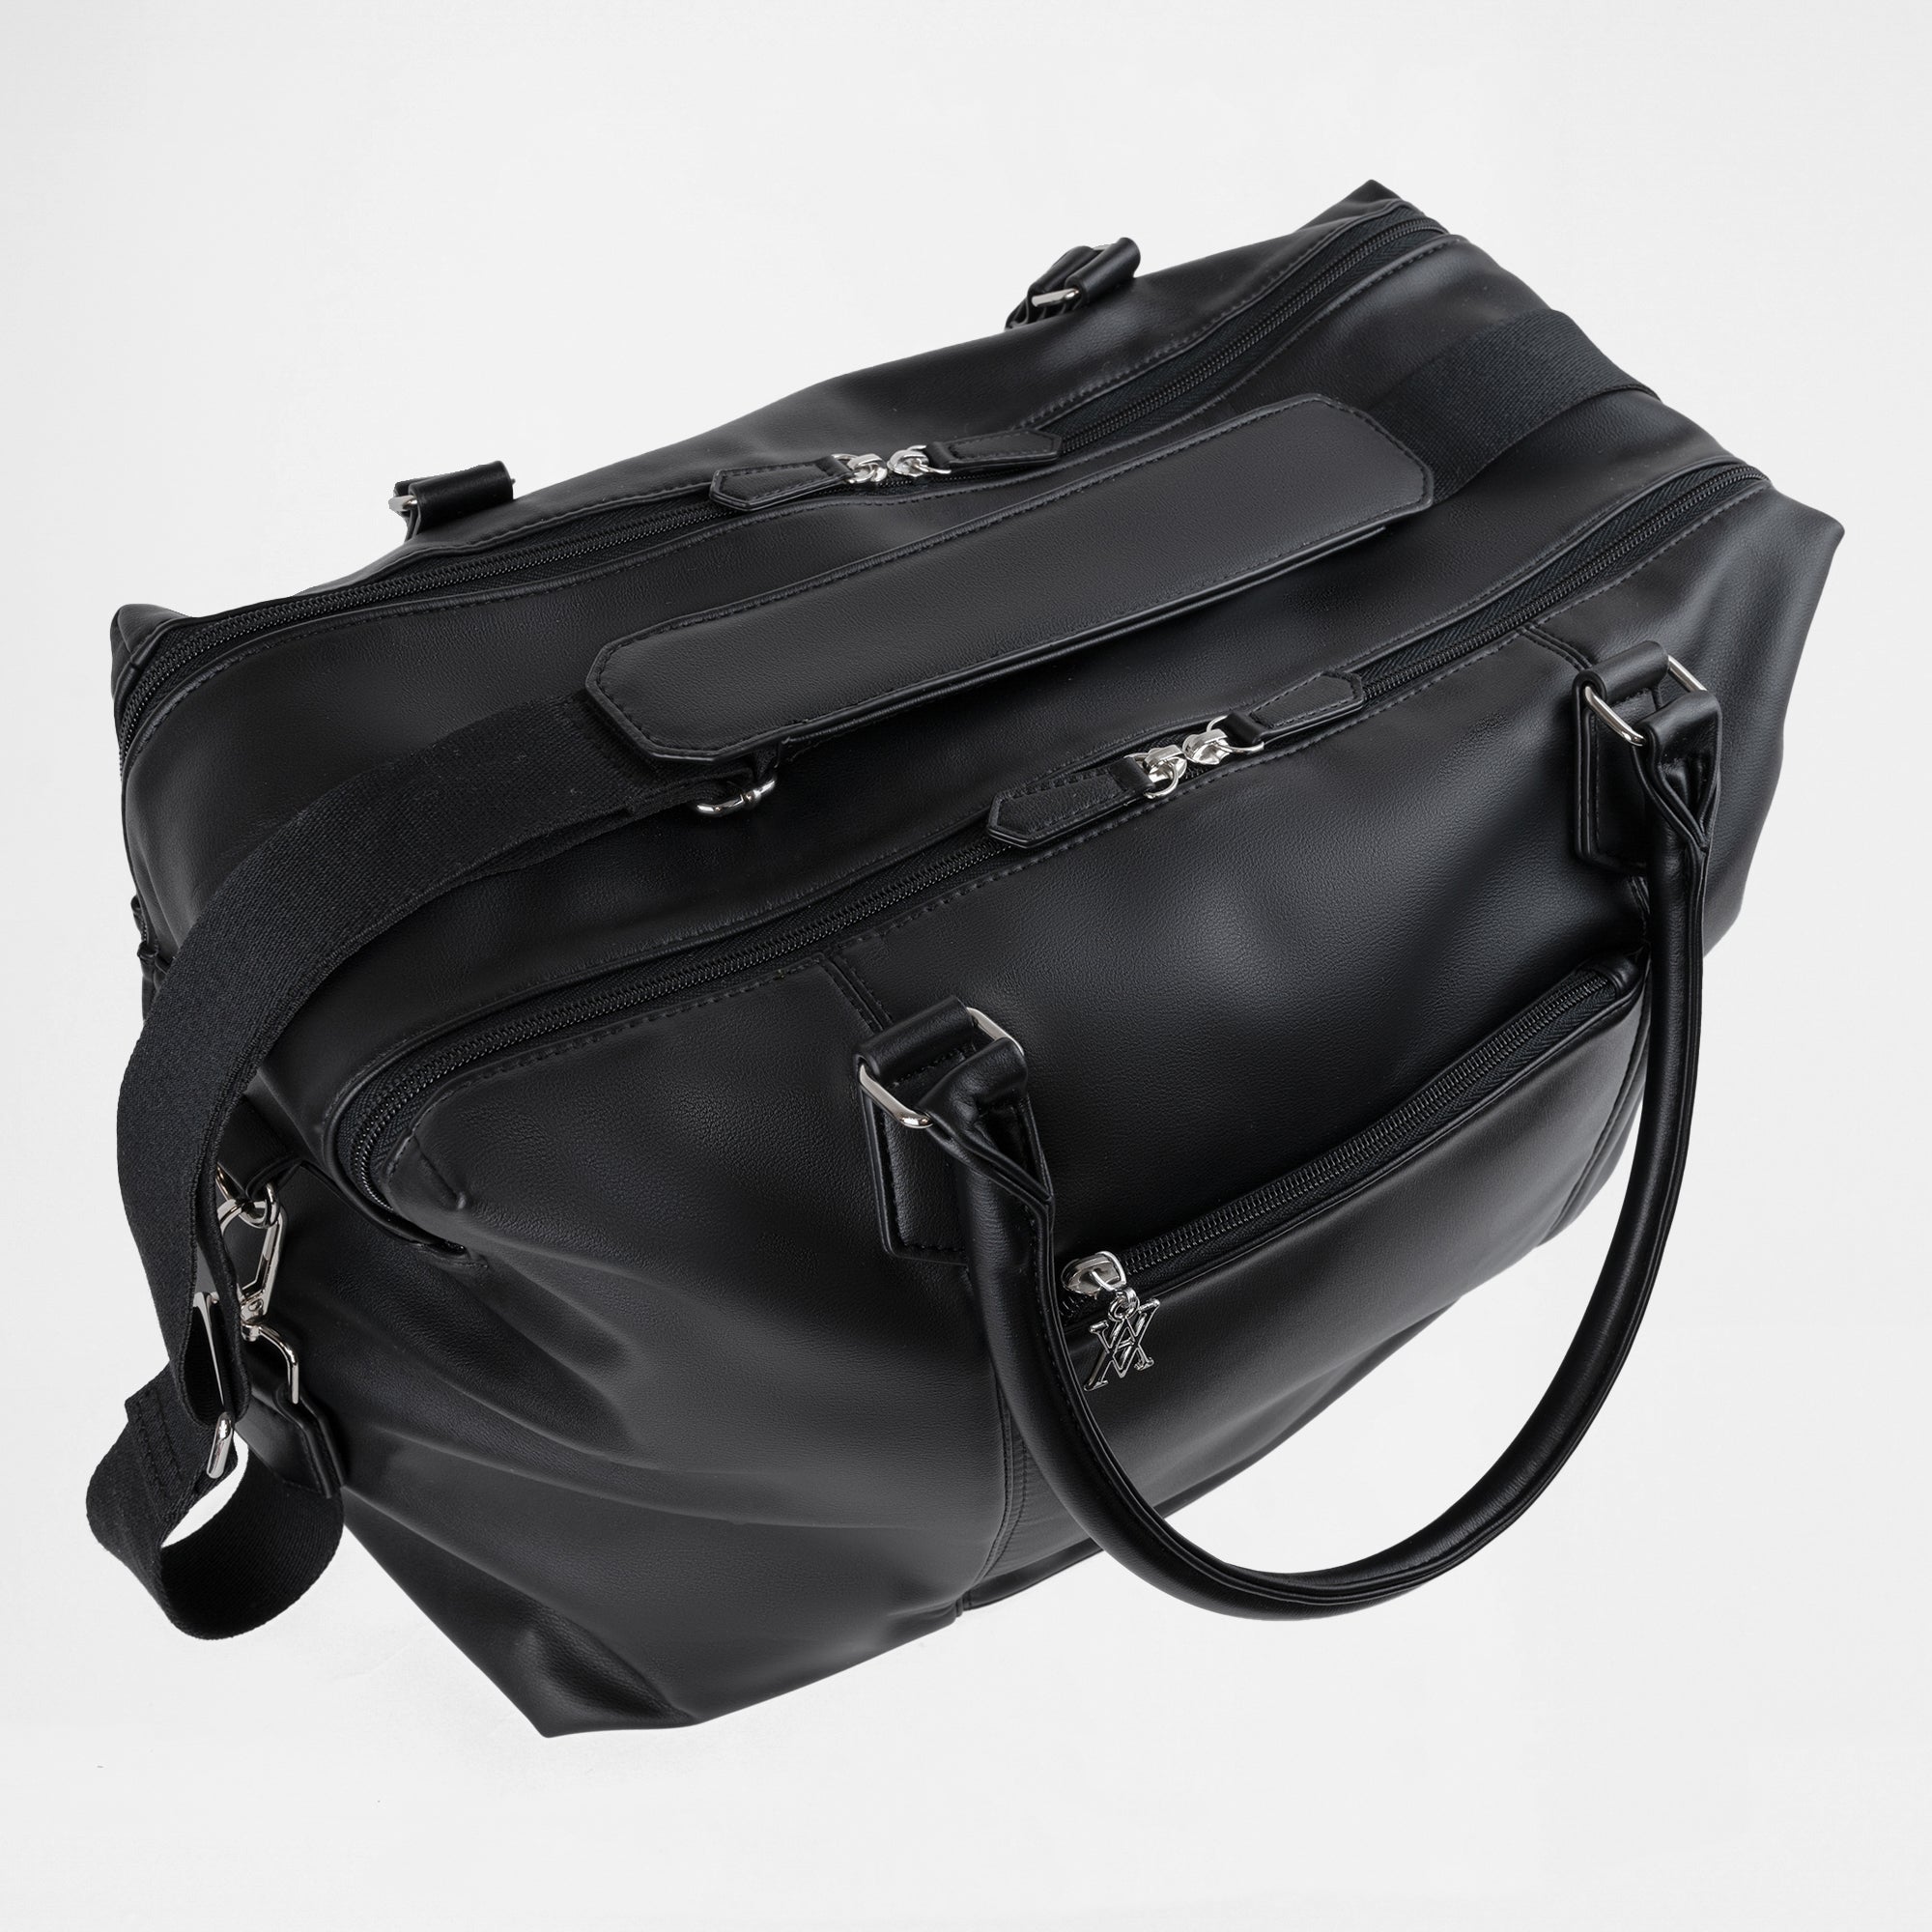 Vienna Travel Laptop Bag - Black